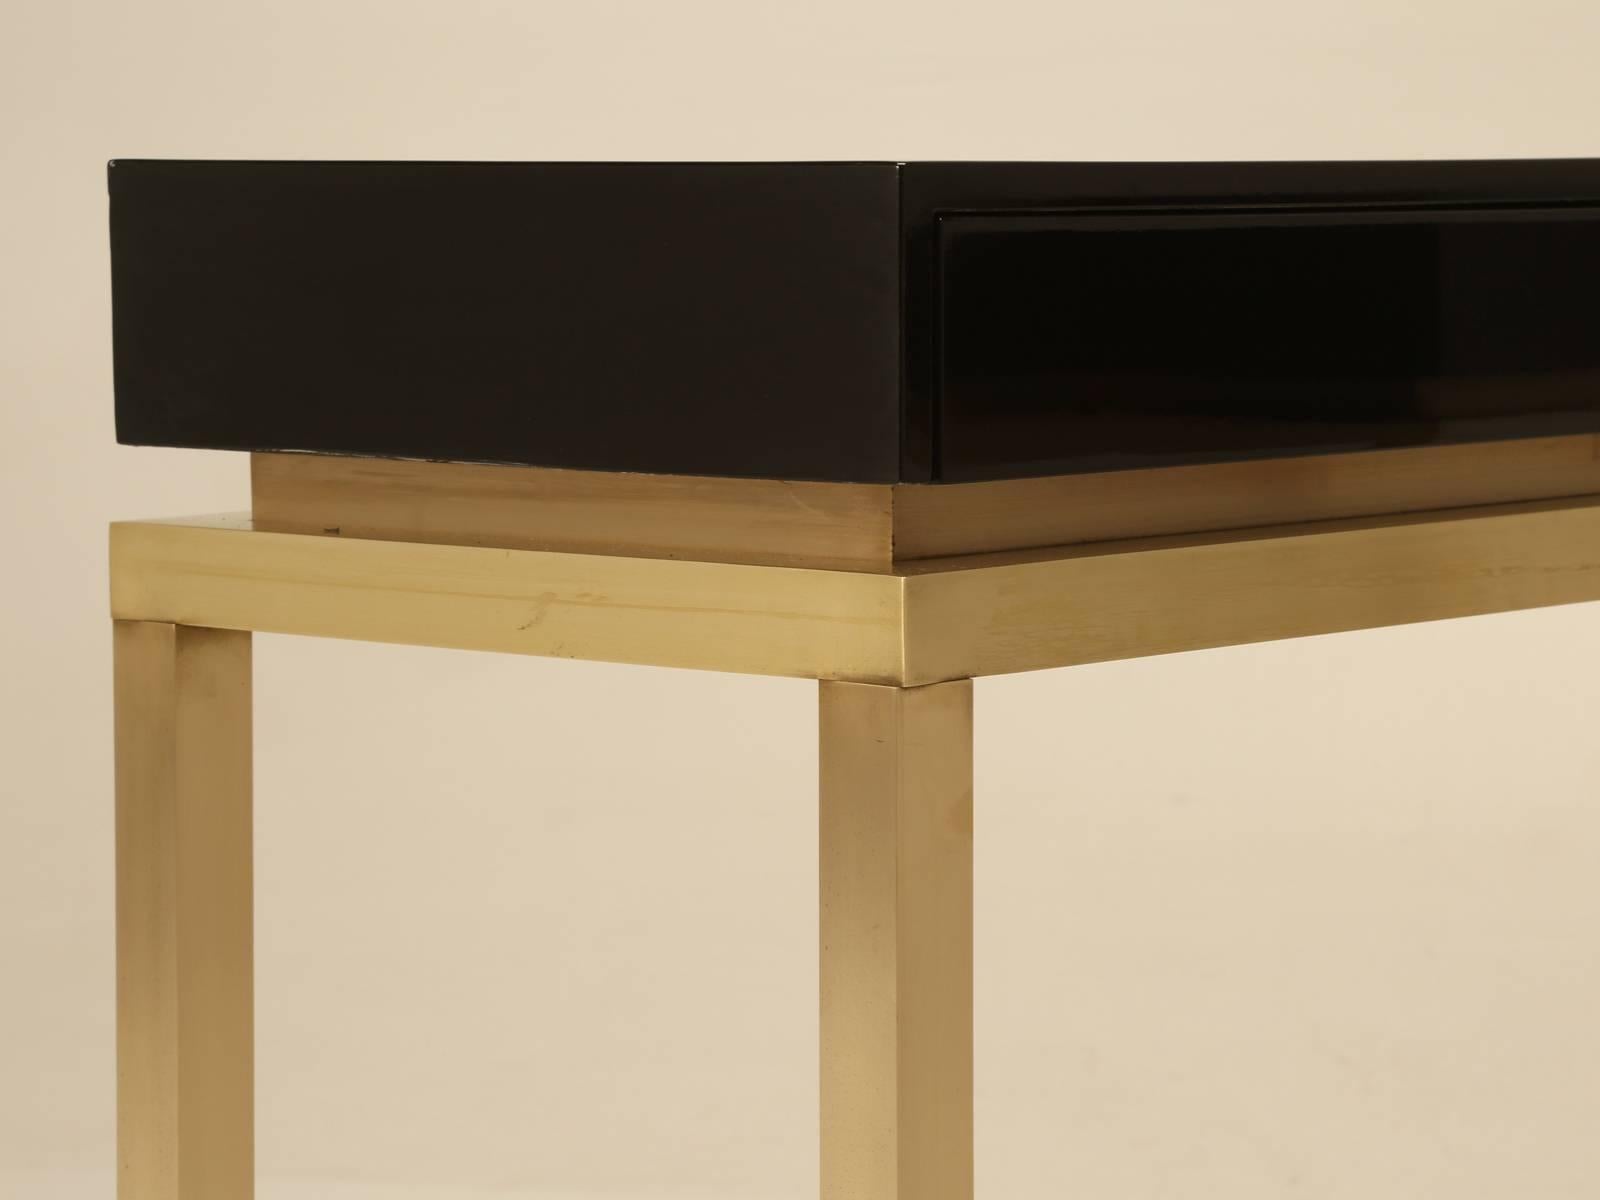 Late 20th Century Guy Lefevre Designed Console Tables for Maison Jansen